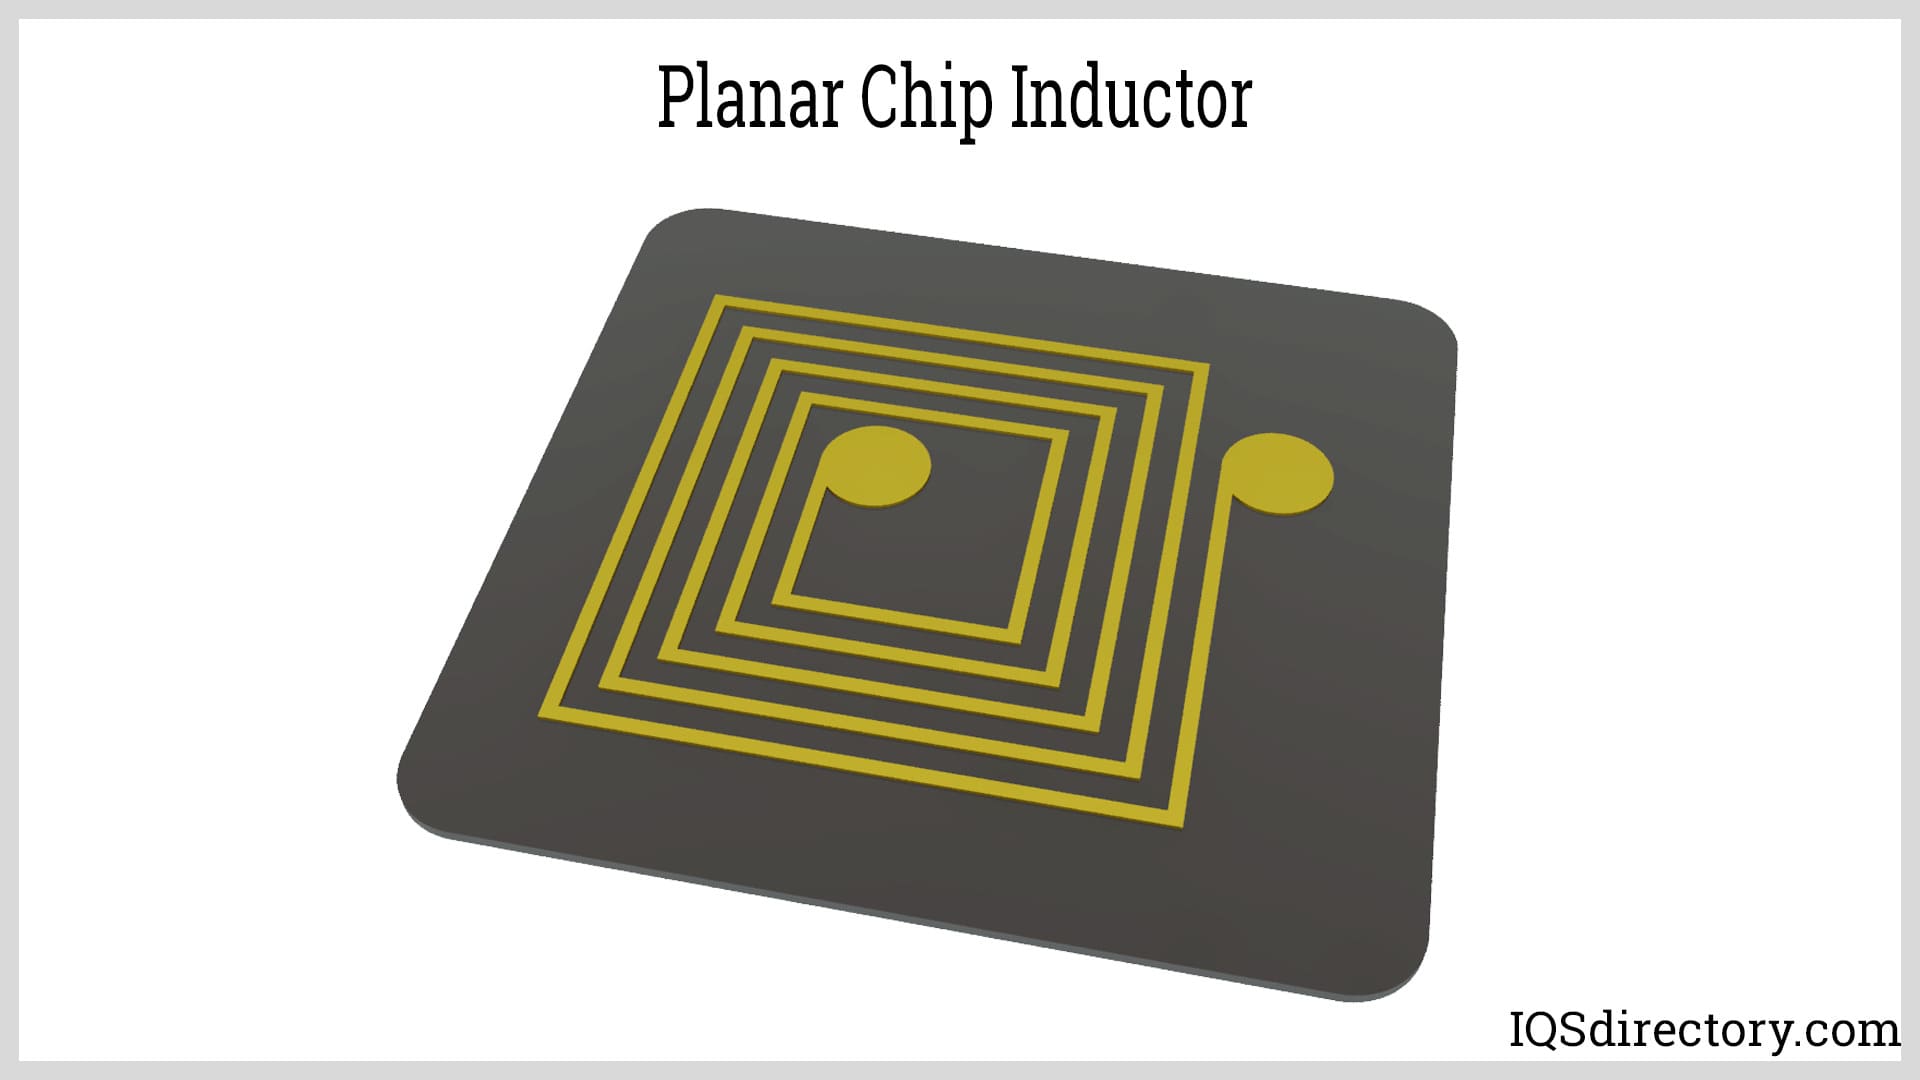 Planar Chip Inductor